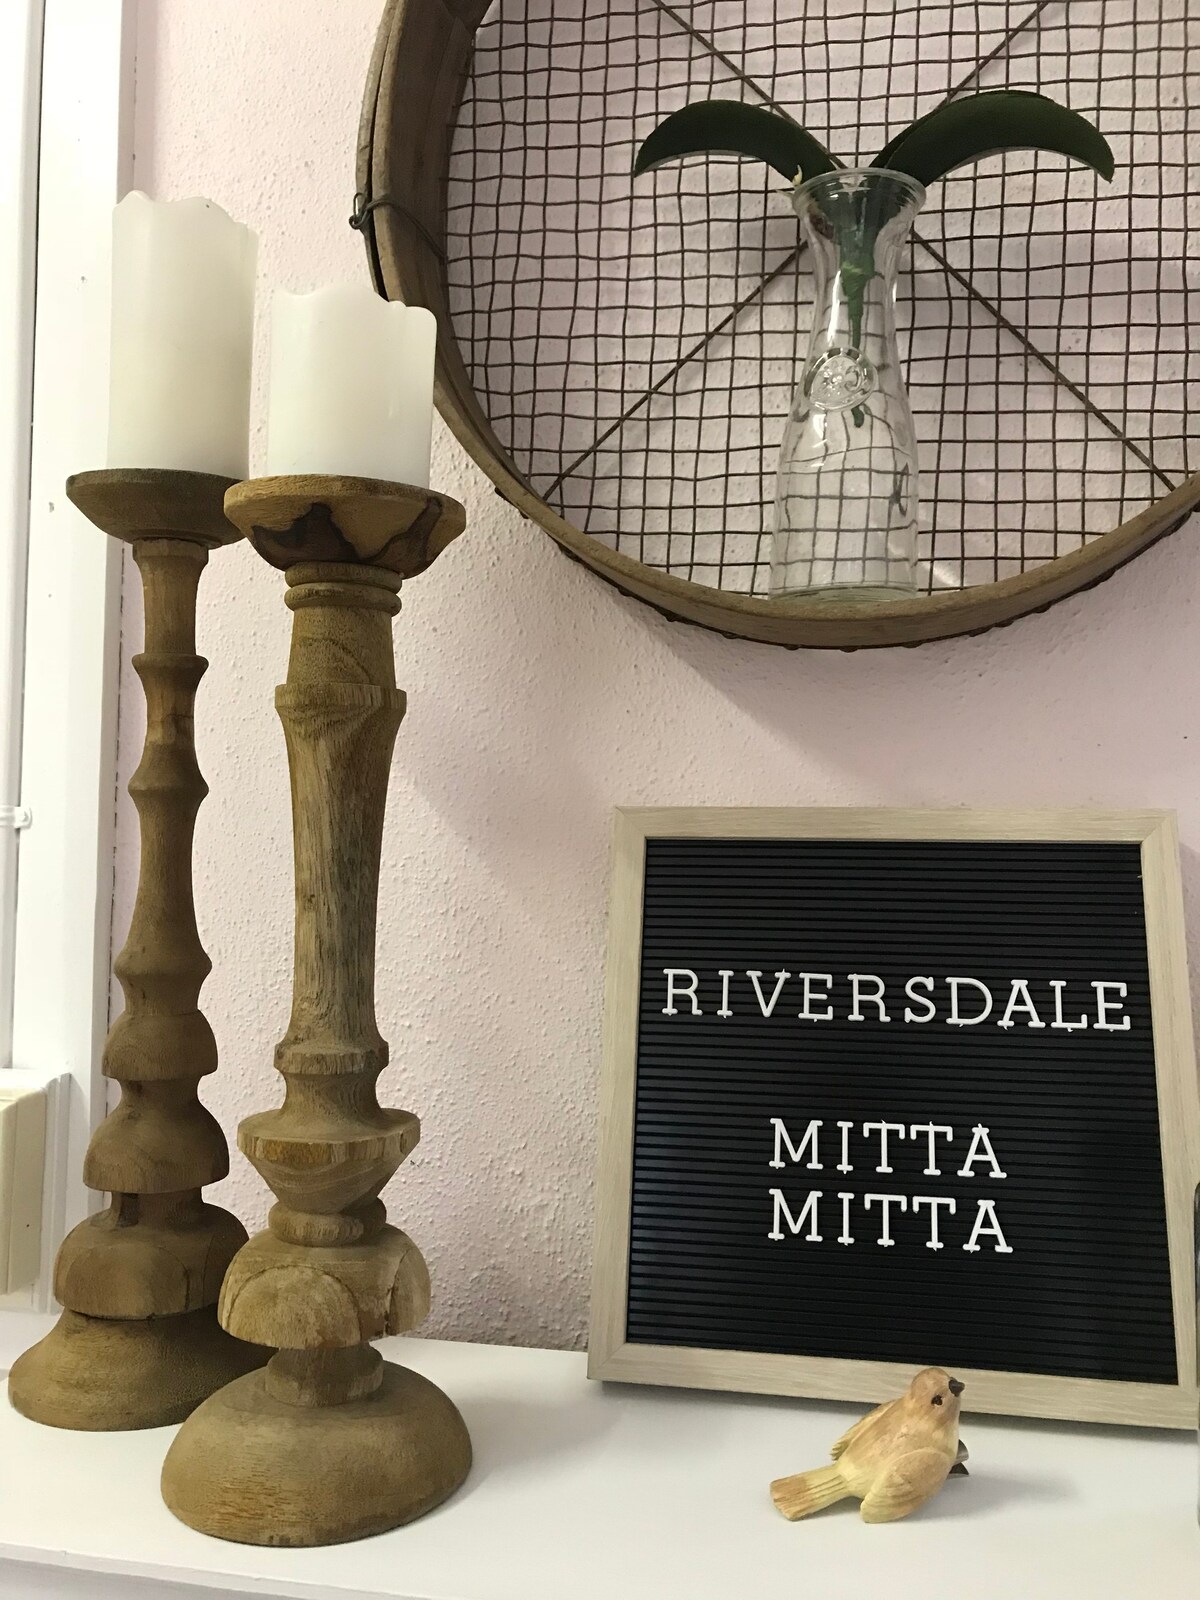 Riversdale Mitta Mitta